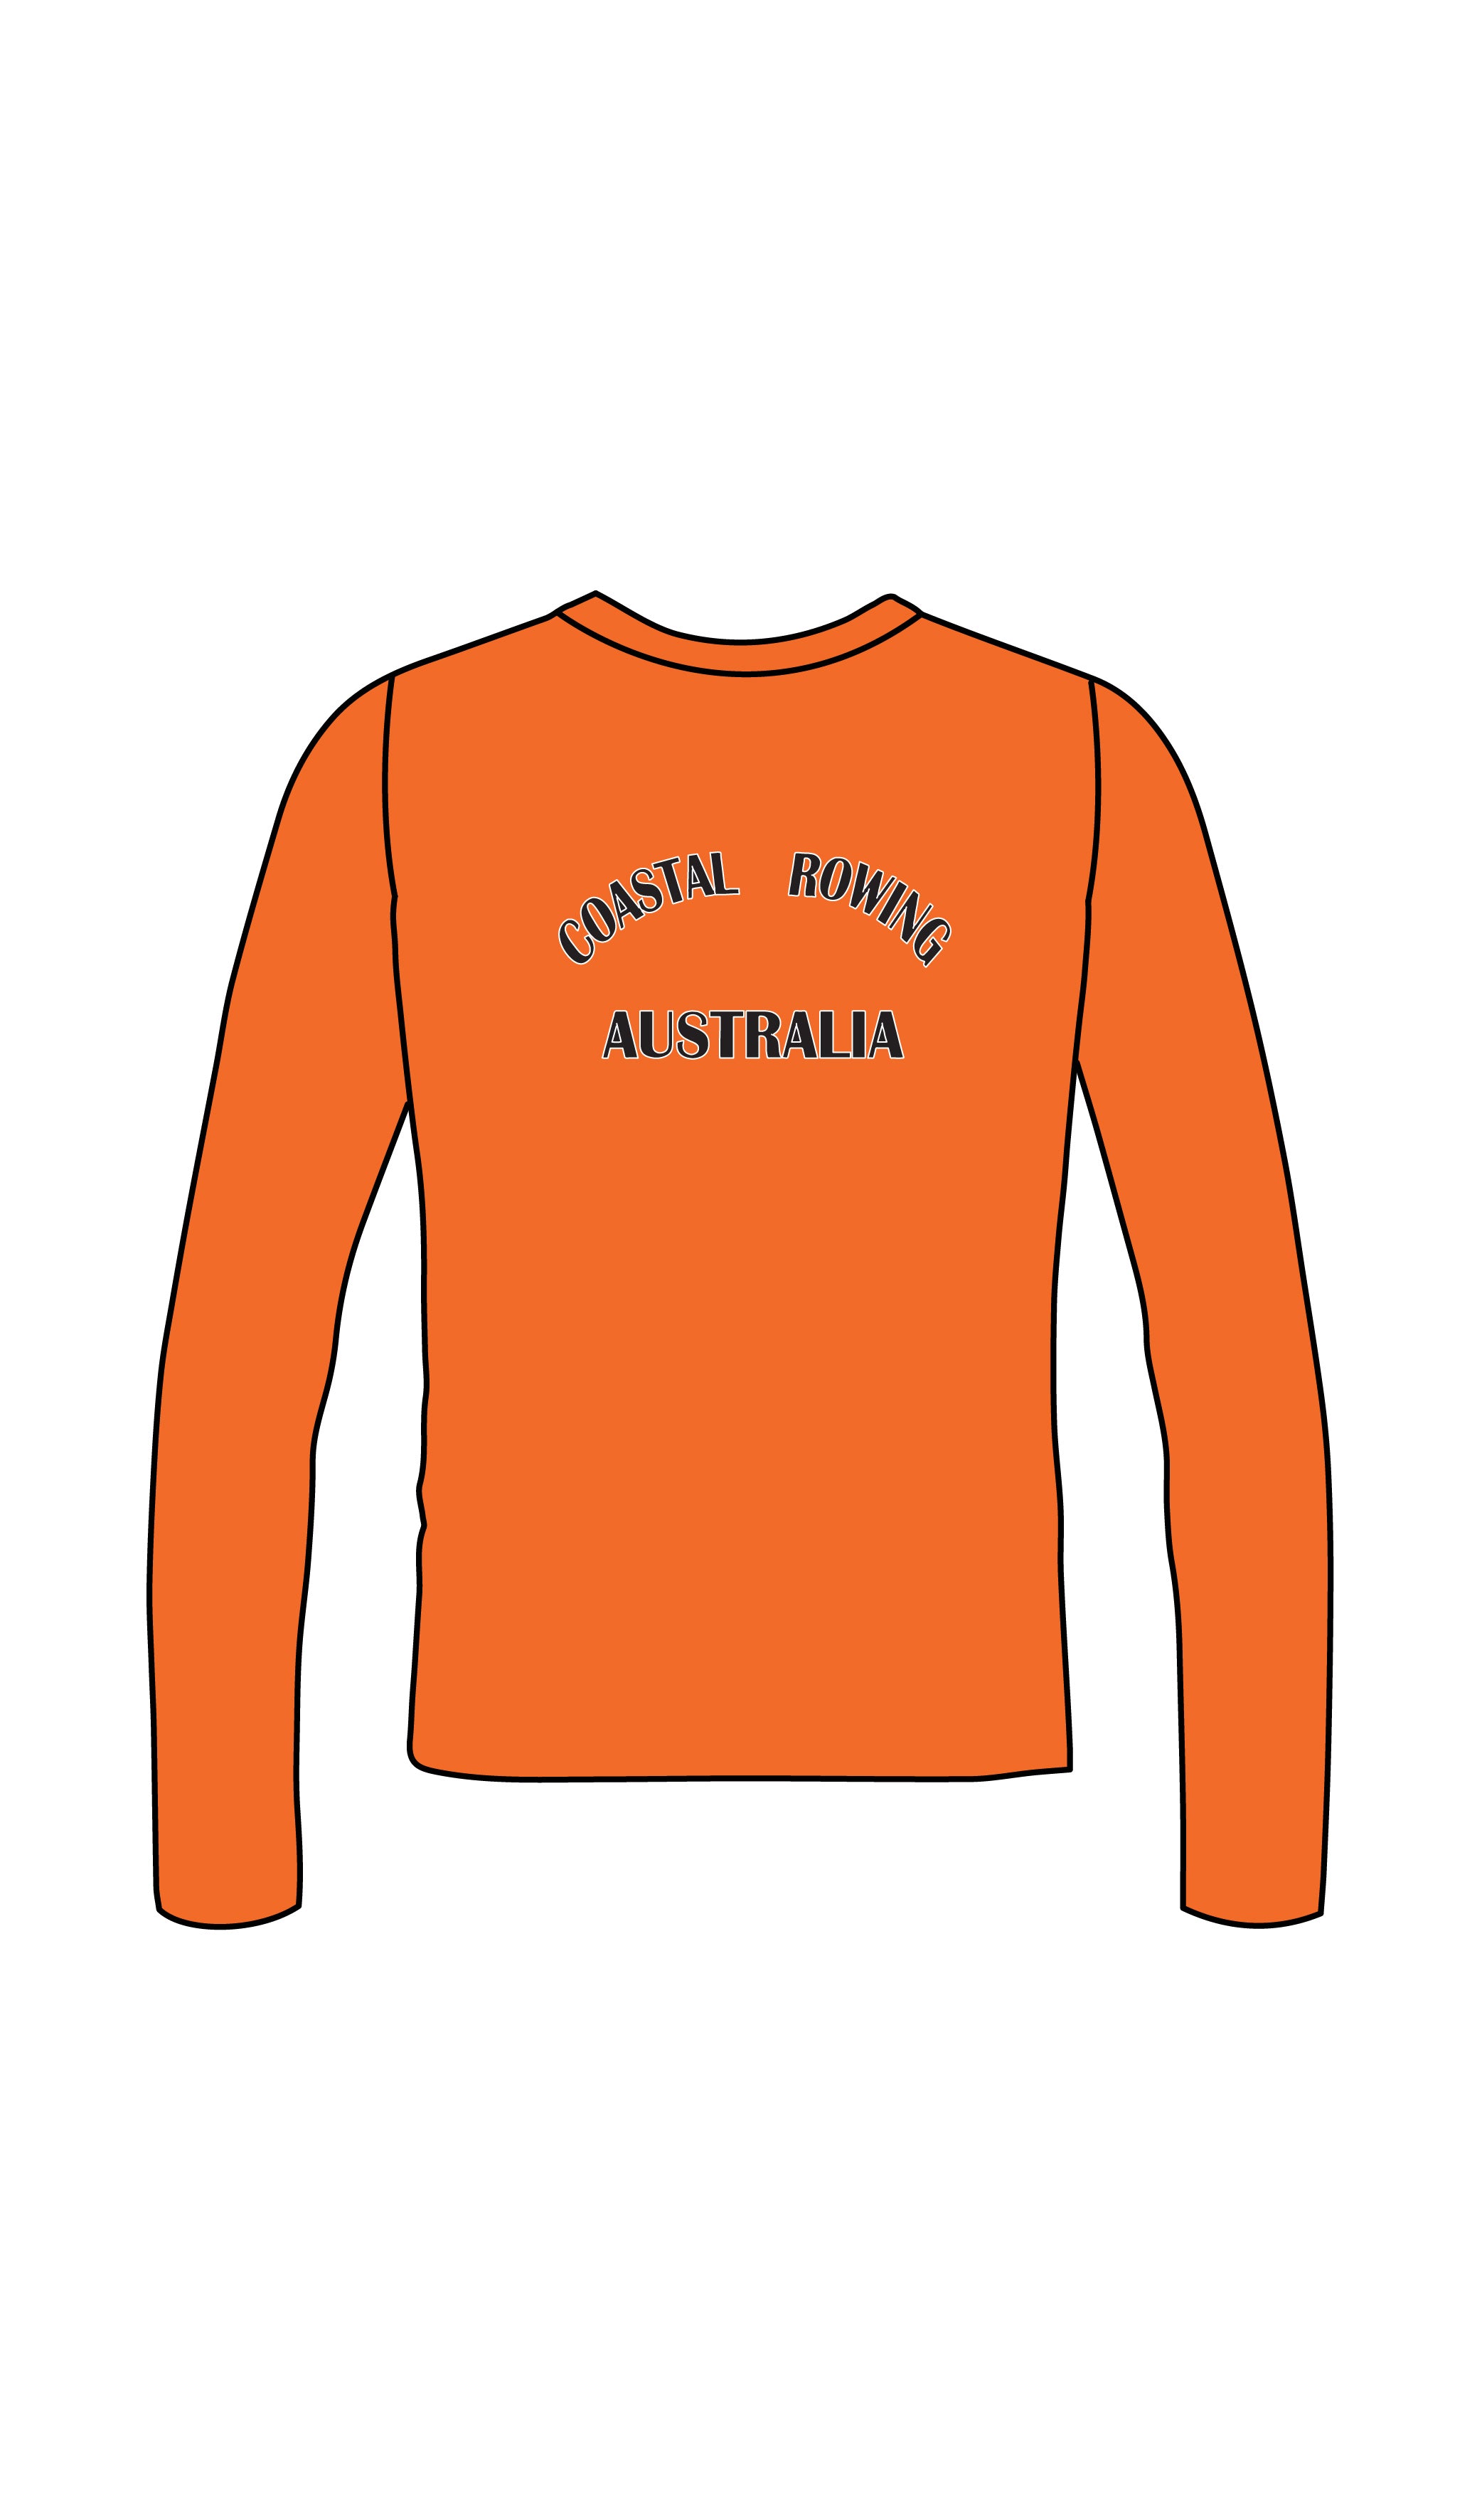 COASTAL ROWING AUSTRALIA - Ladies Long Sleeve Base Layer